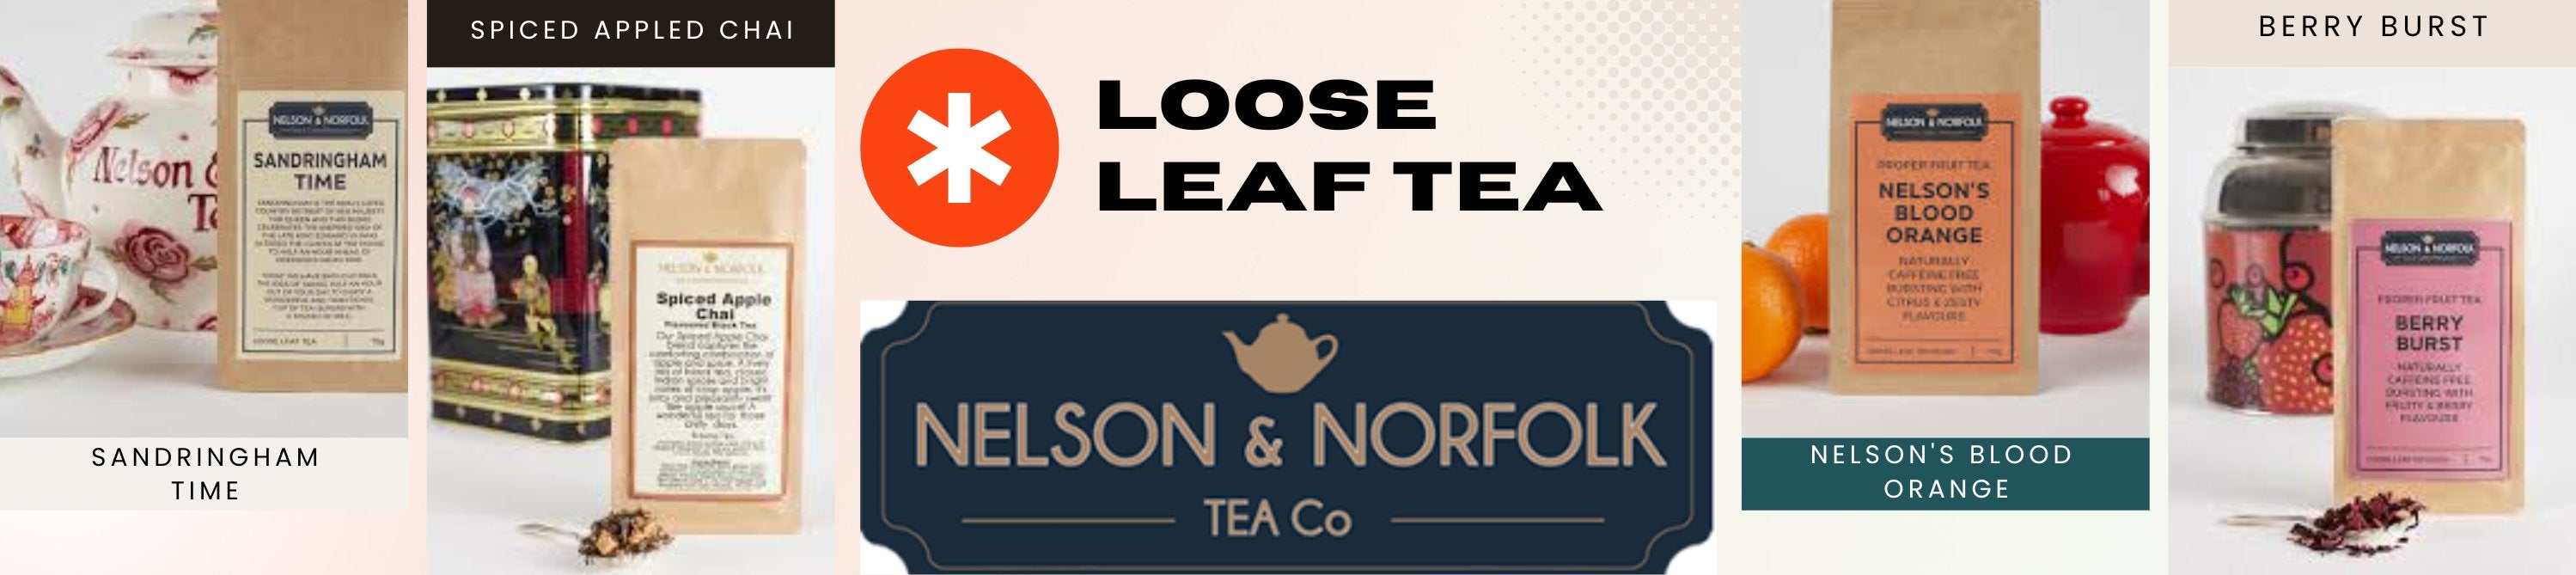 Nelson & Norfolk Tea Company